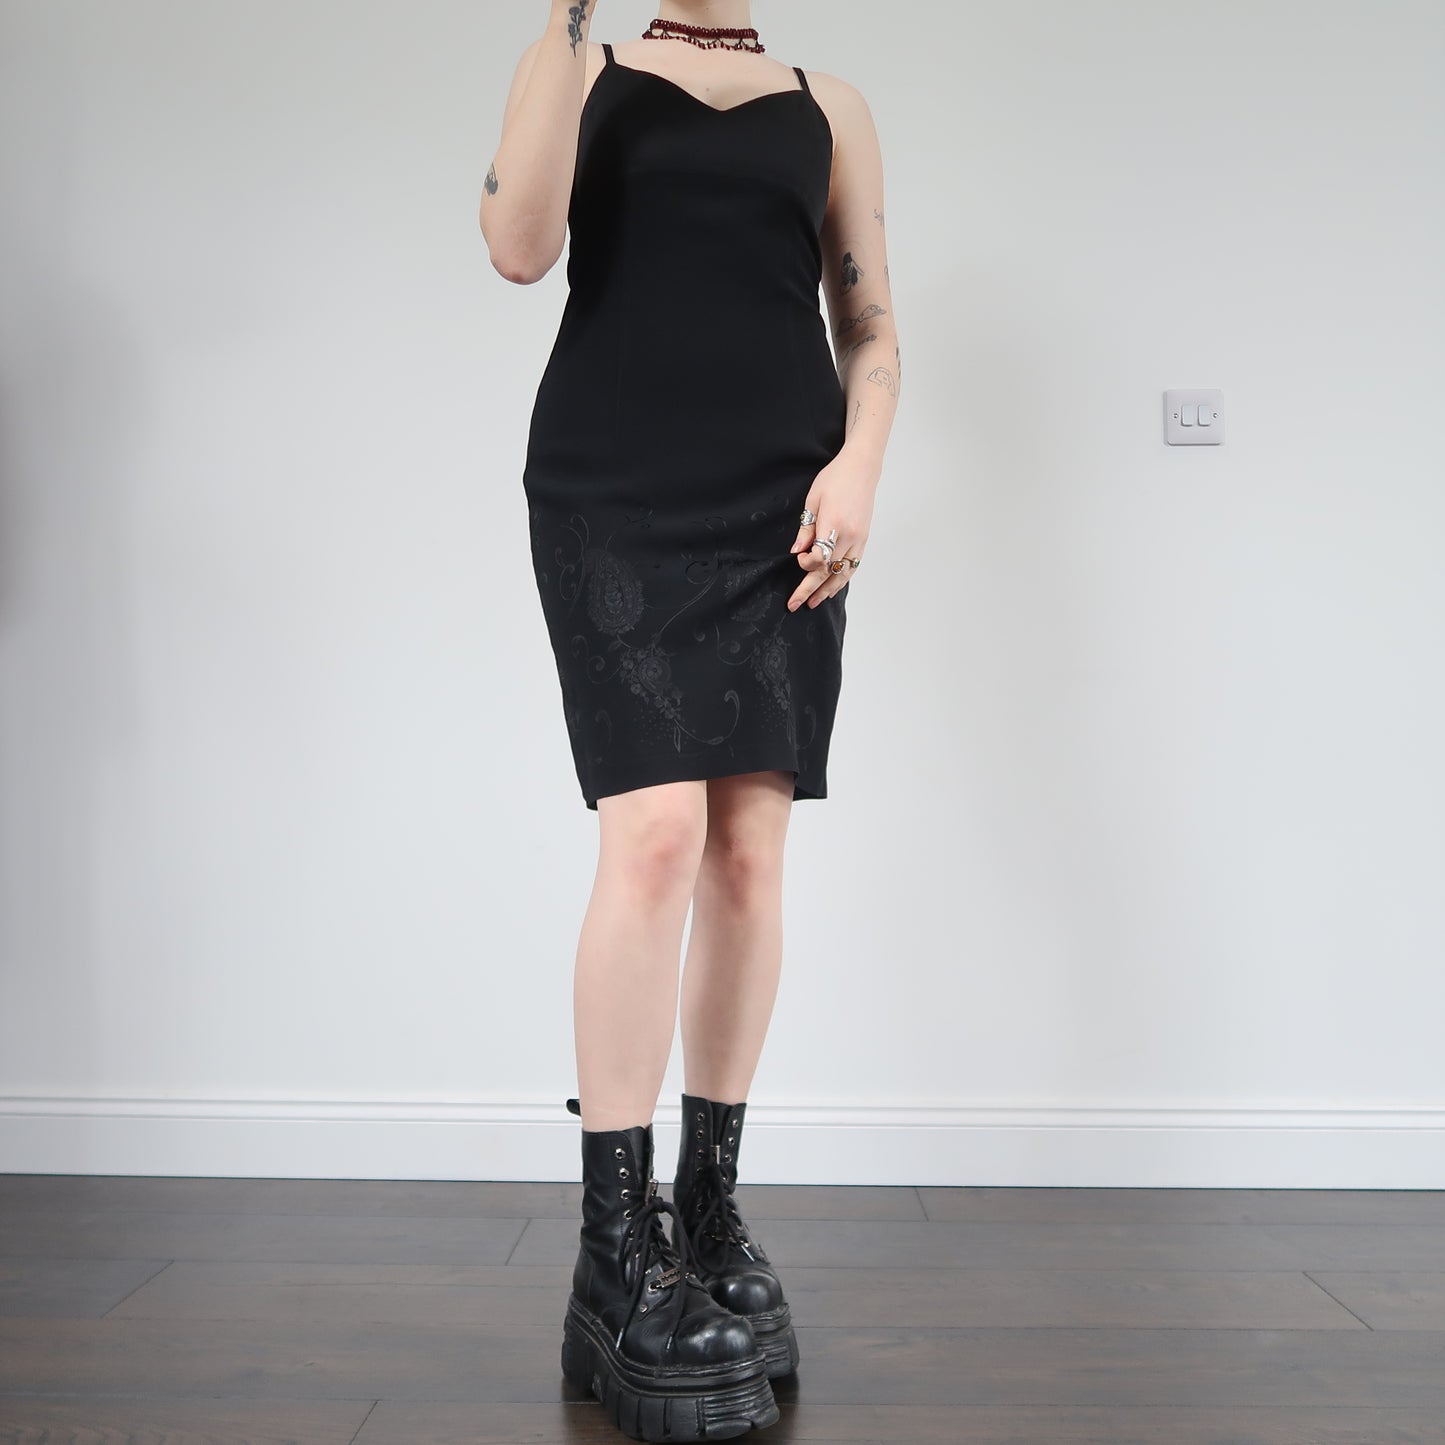 Black midi dress - size 8/10